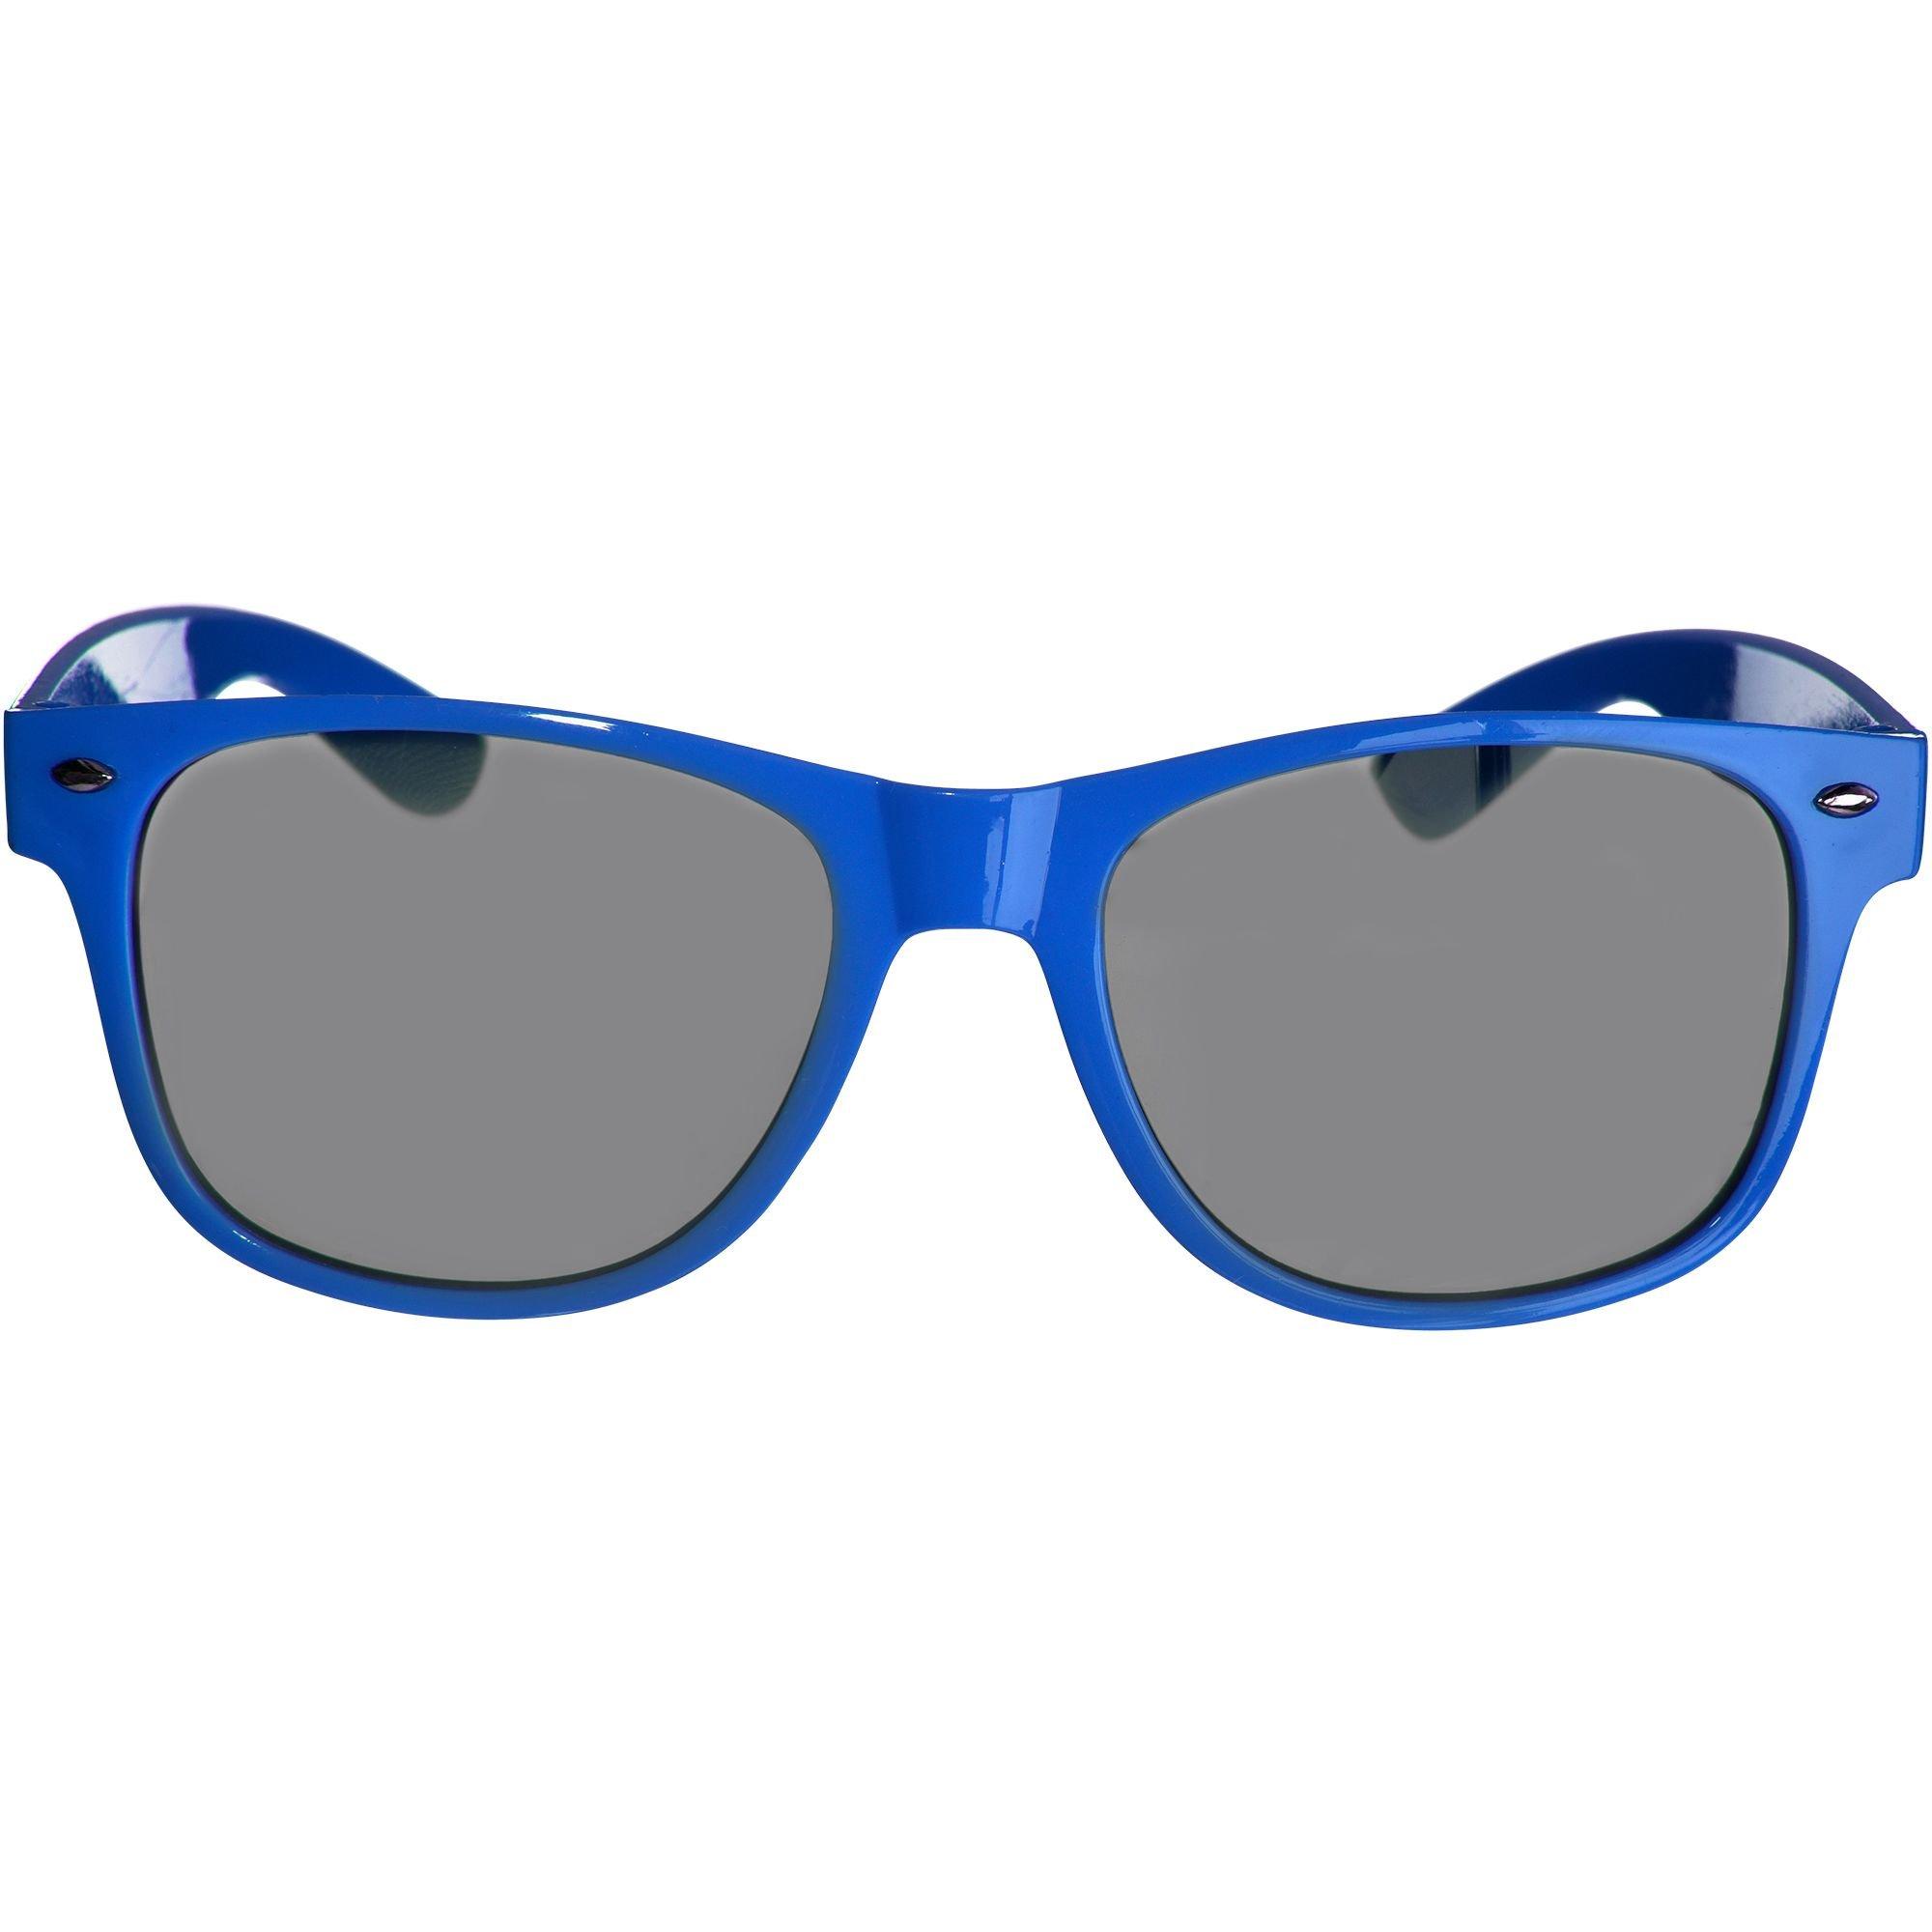 Glasses - Blue UV 400